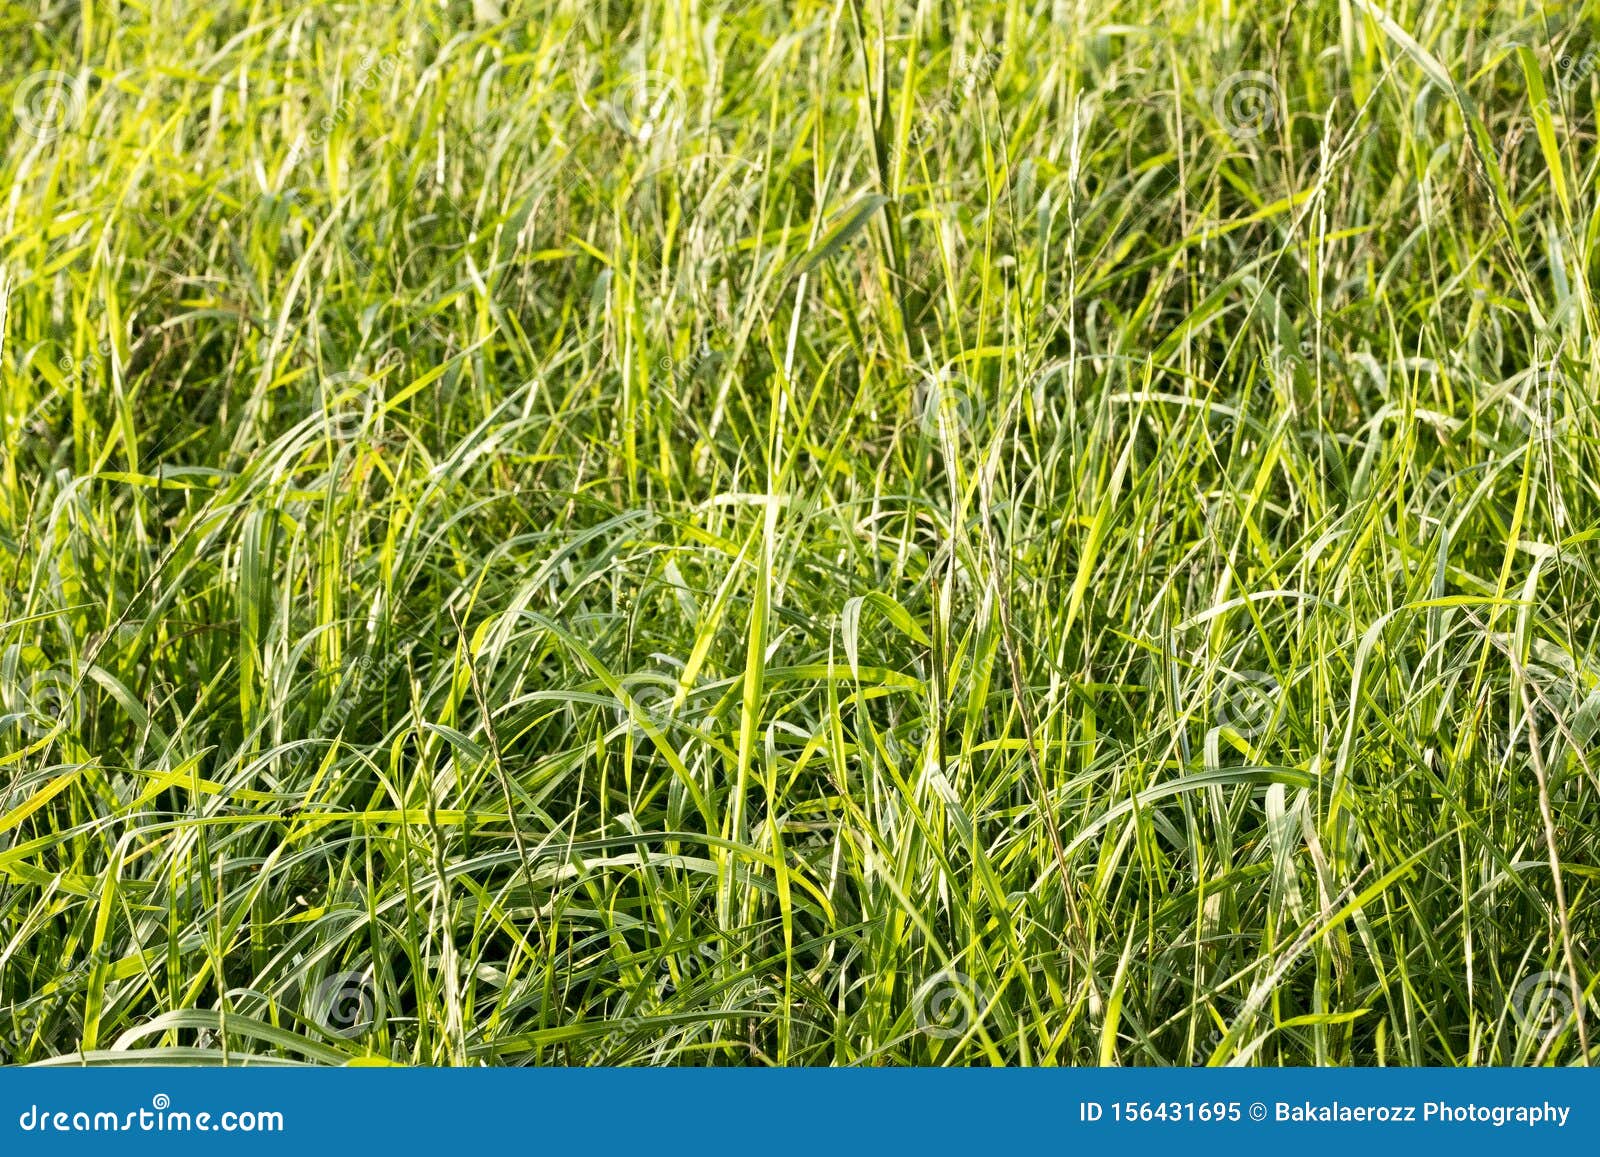 grass macro background fifty megapixels